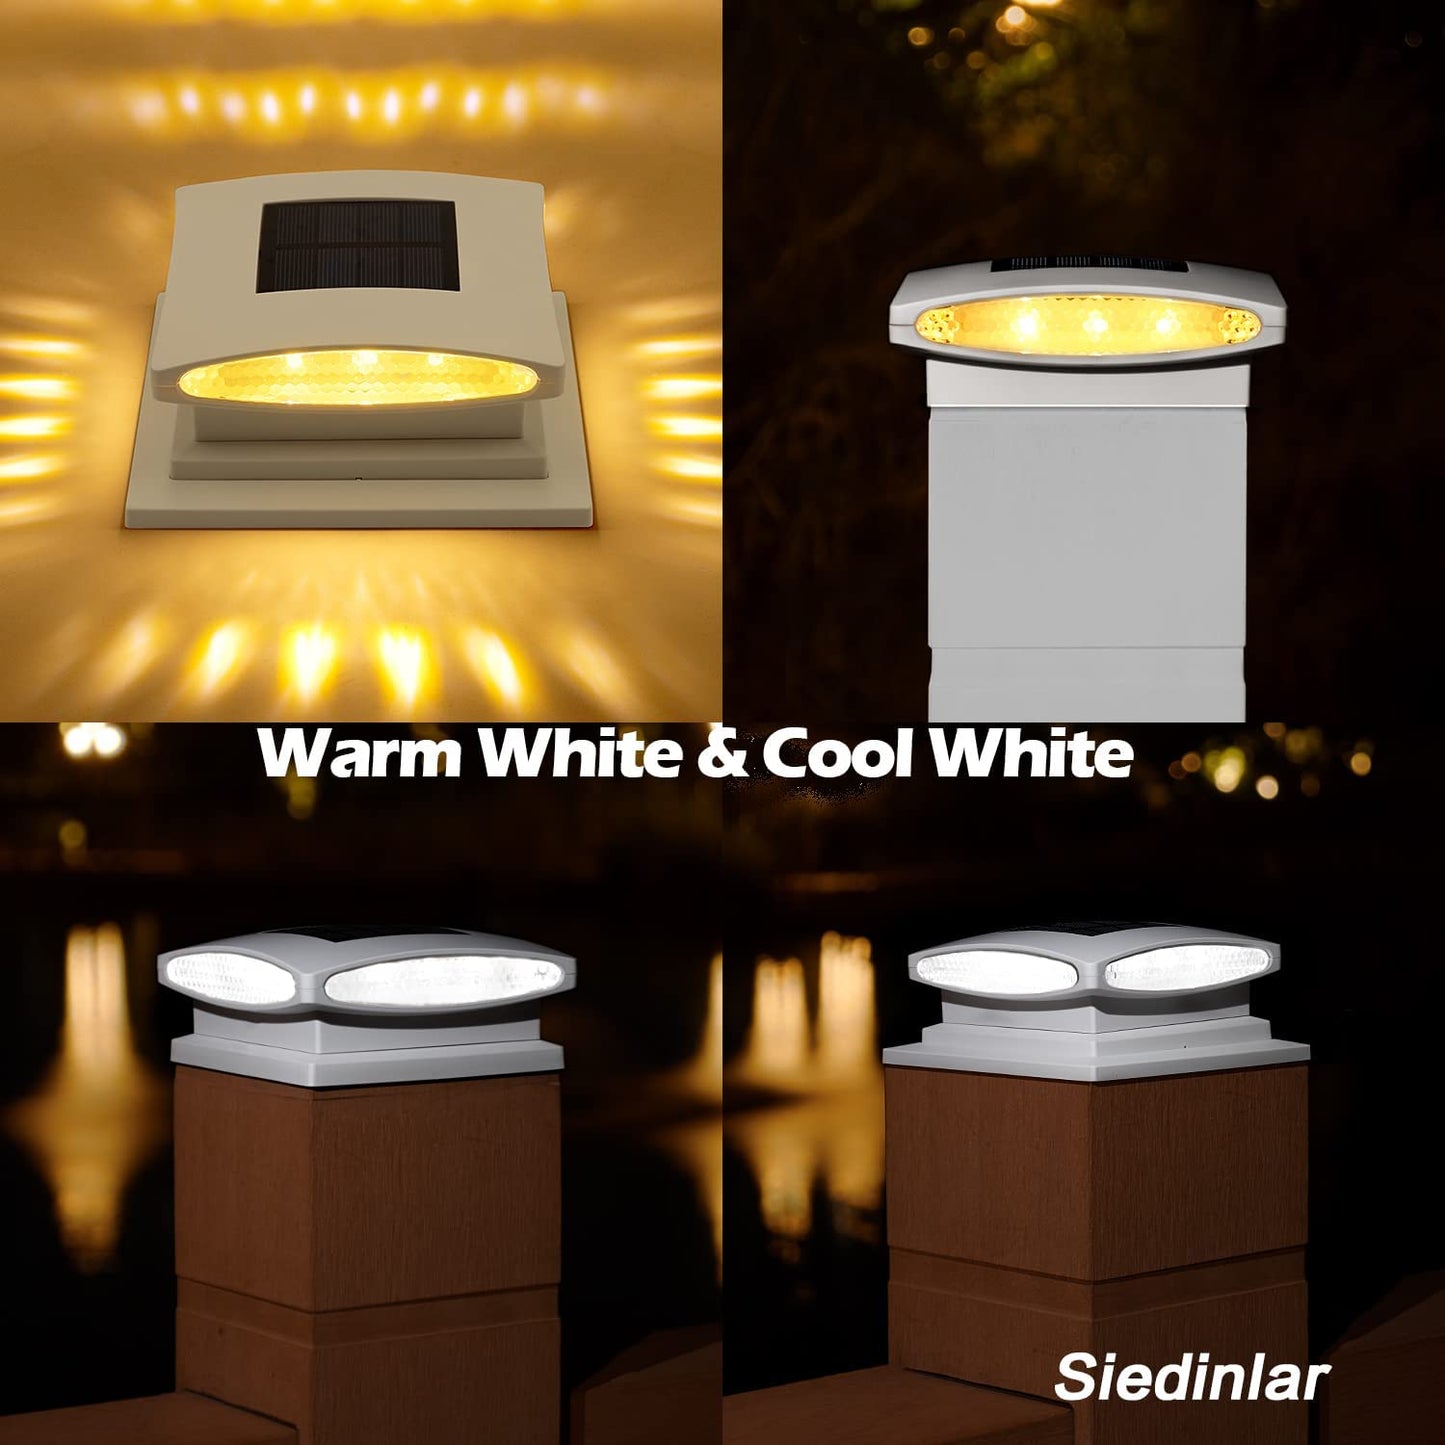 Siedinlar SD1064W Solar Post Cap Lights Outdoor, 2 Modes 24 LED Solar Powered Fence Deck Light for 4x4 5x5 6x6 Posts Garden Patio Decoration Warm White & Cool White, White (4 Pack)